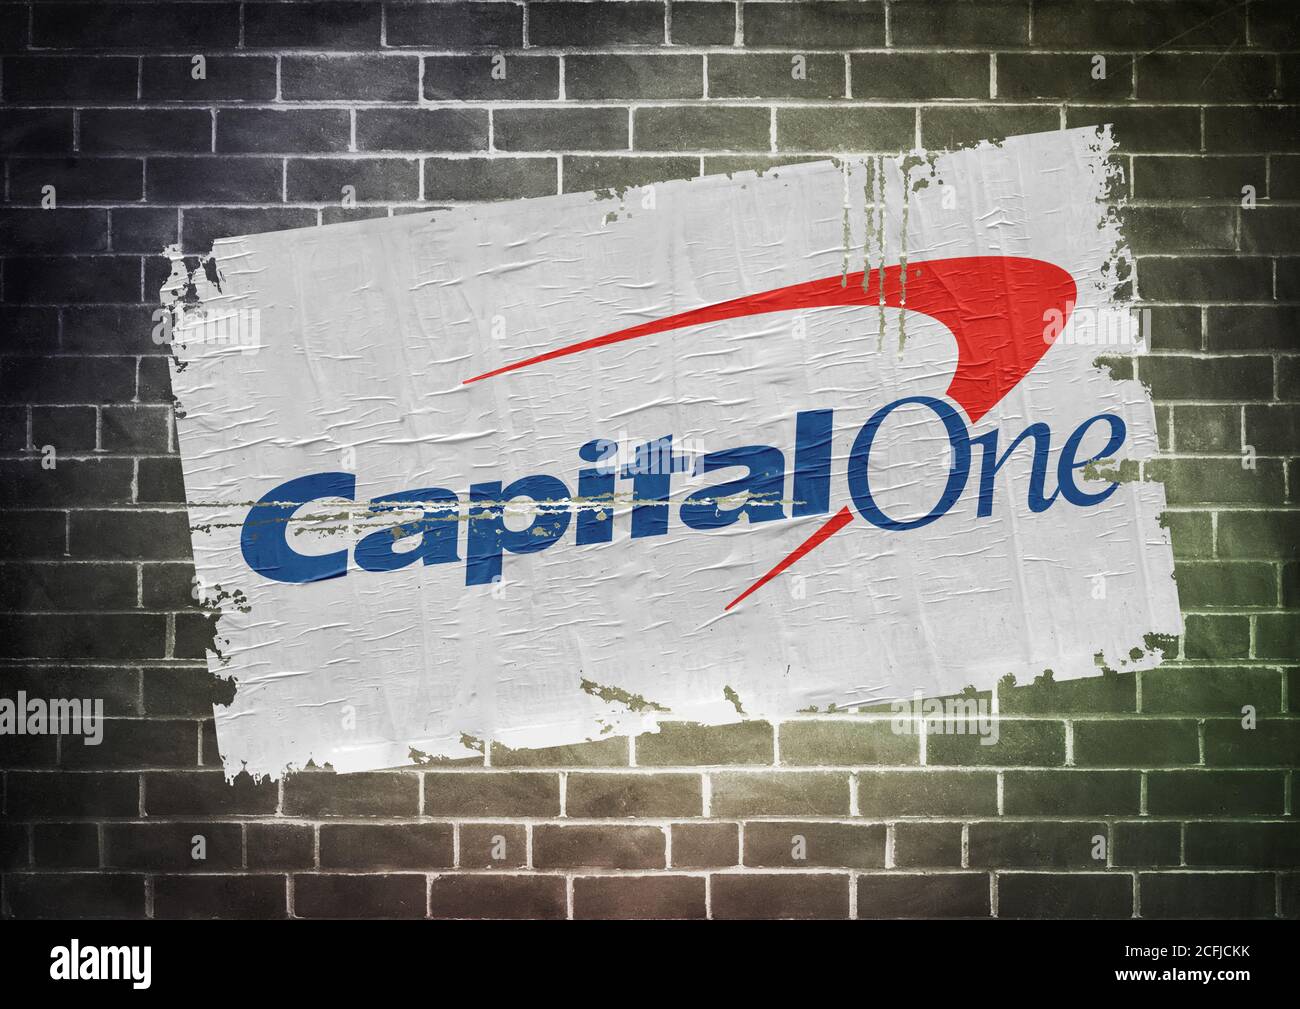 Capital One Foto Stock